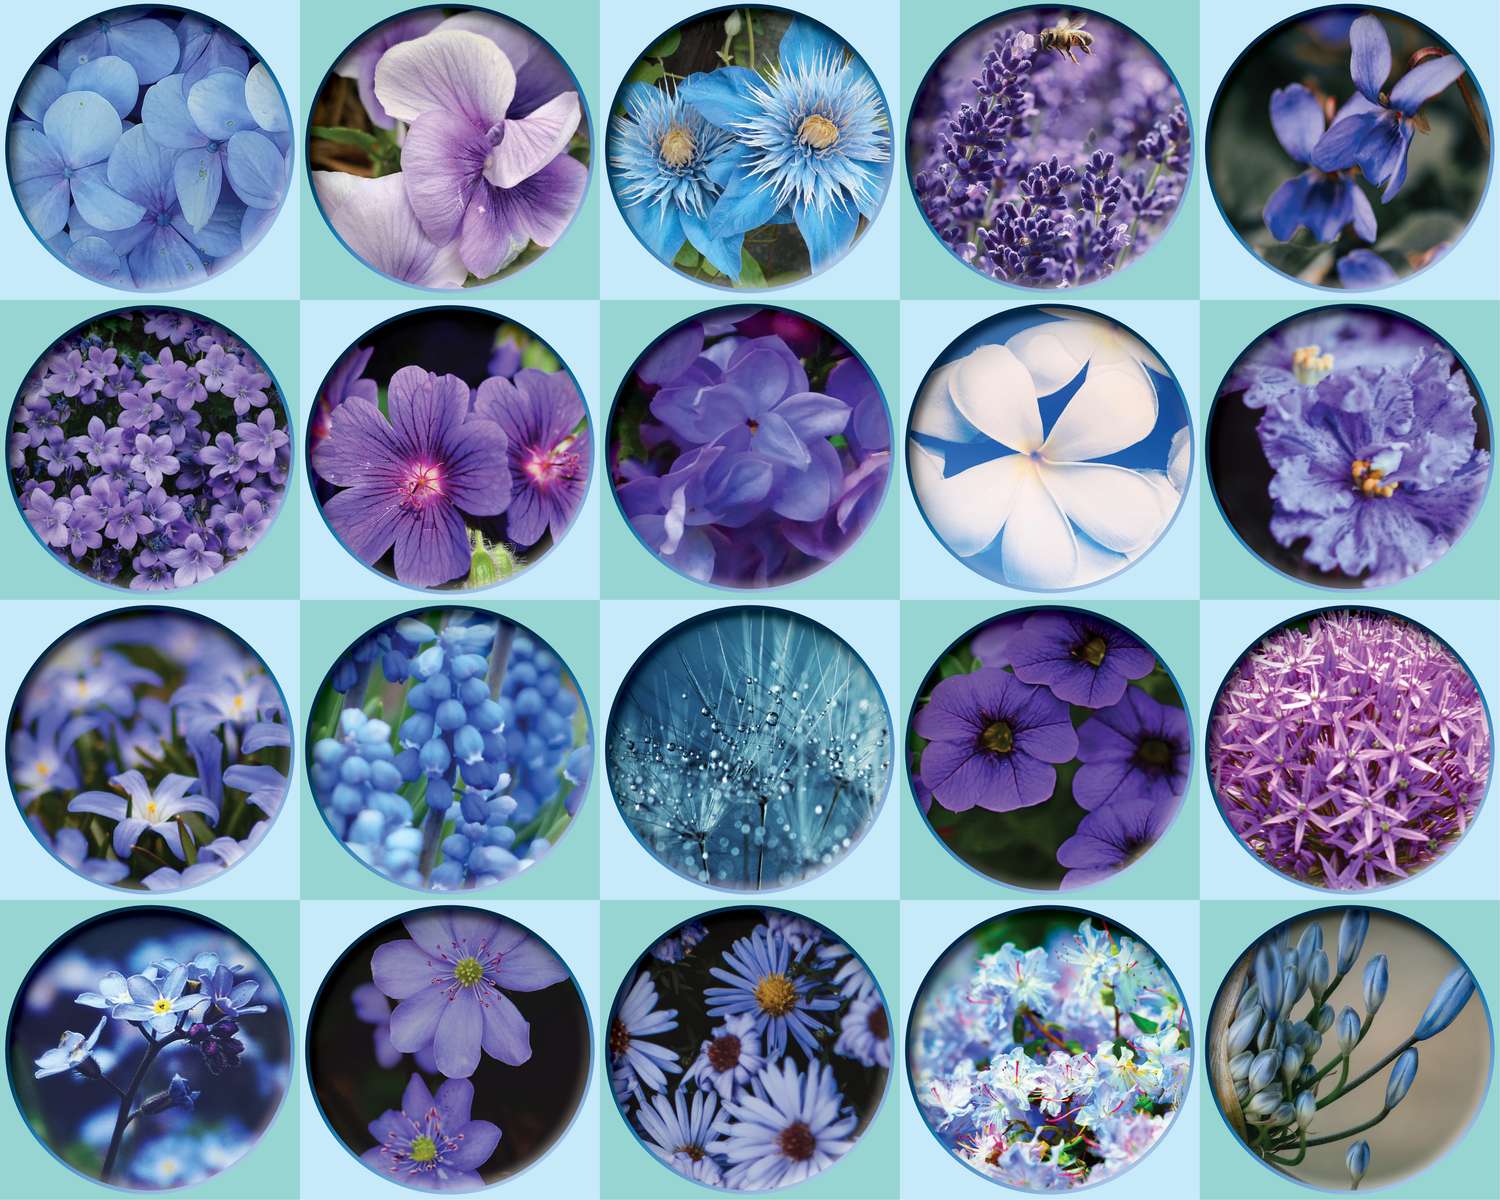 fioletowe kwiaty puzzle online ze zdjęcia